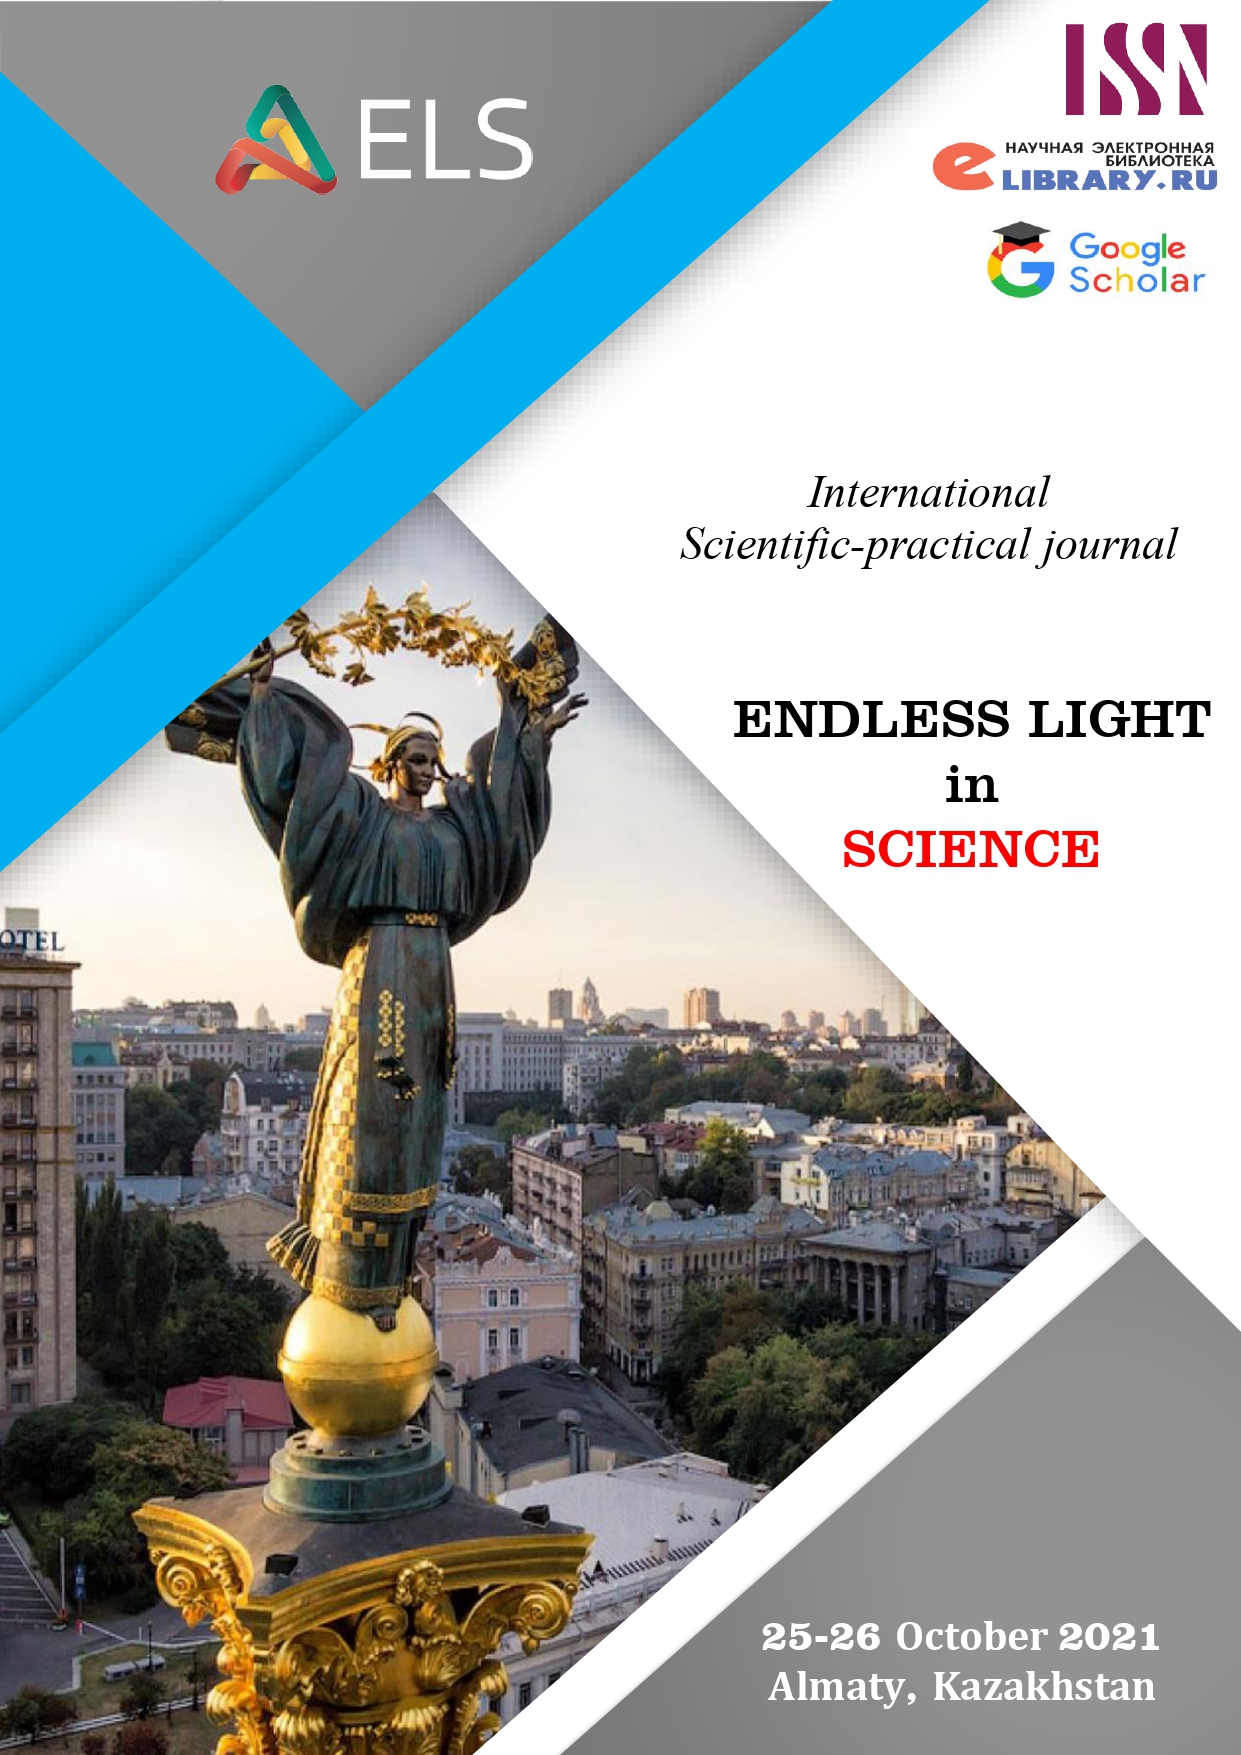 International Scientific-practical journal ENDLESS LIGHT in SCIENCE